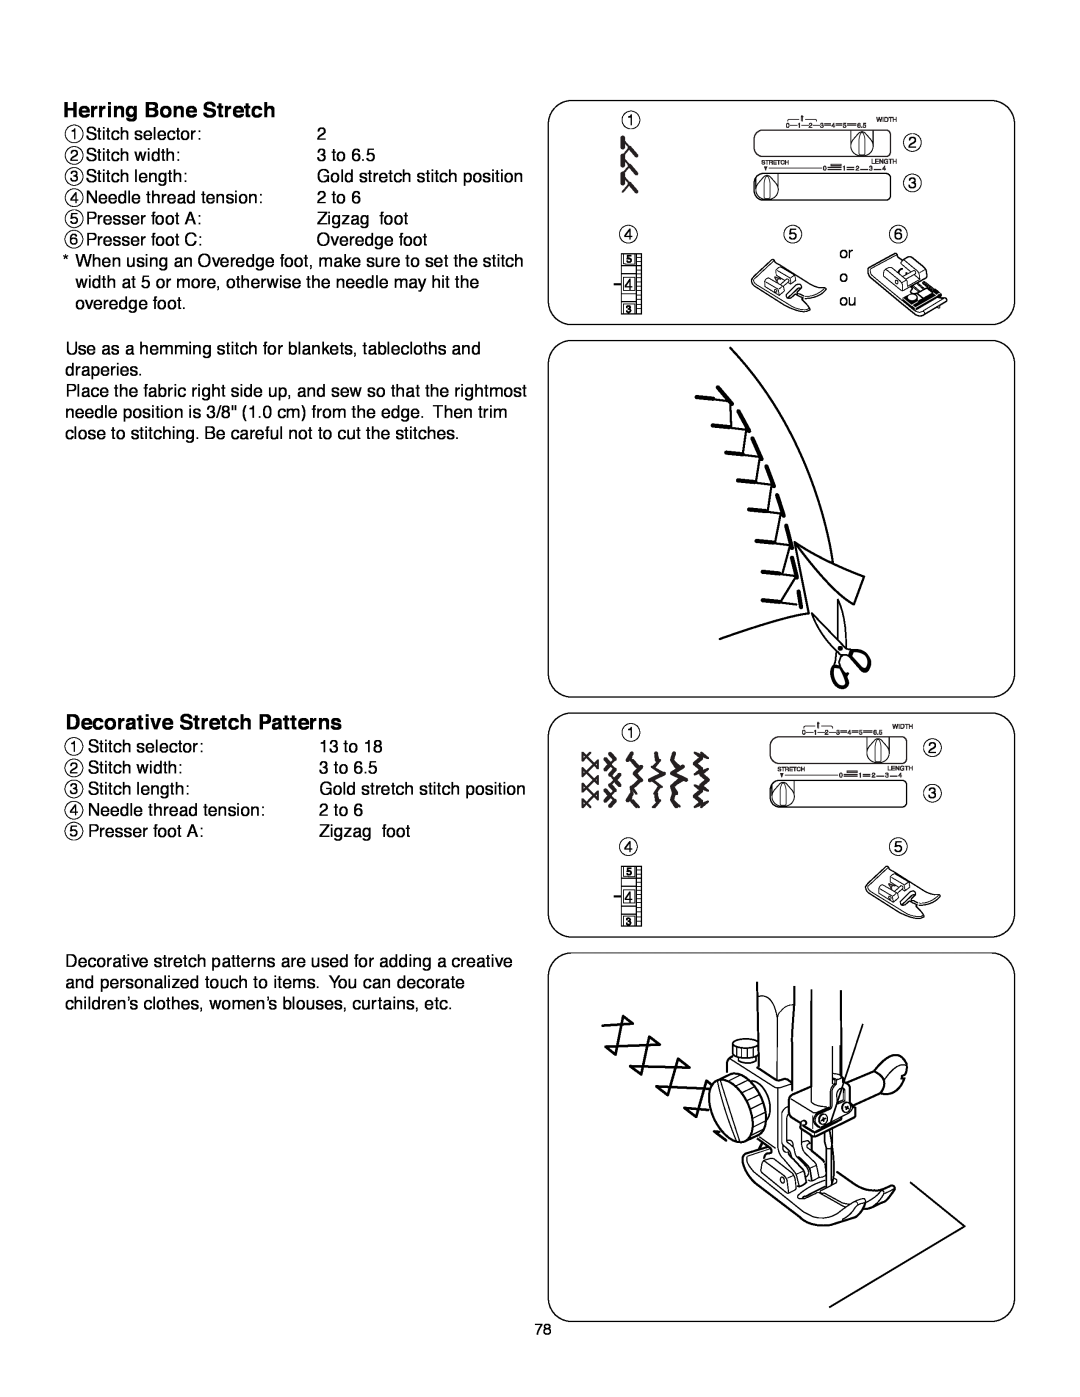 Janome MS-5027 instruction manual Herring Bone Stretch, Decorative Stretch Patterns 